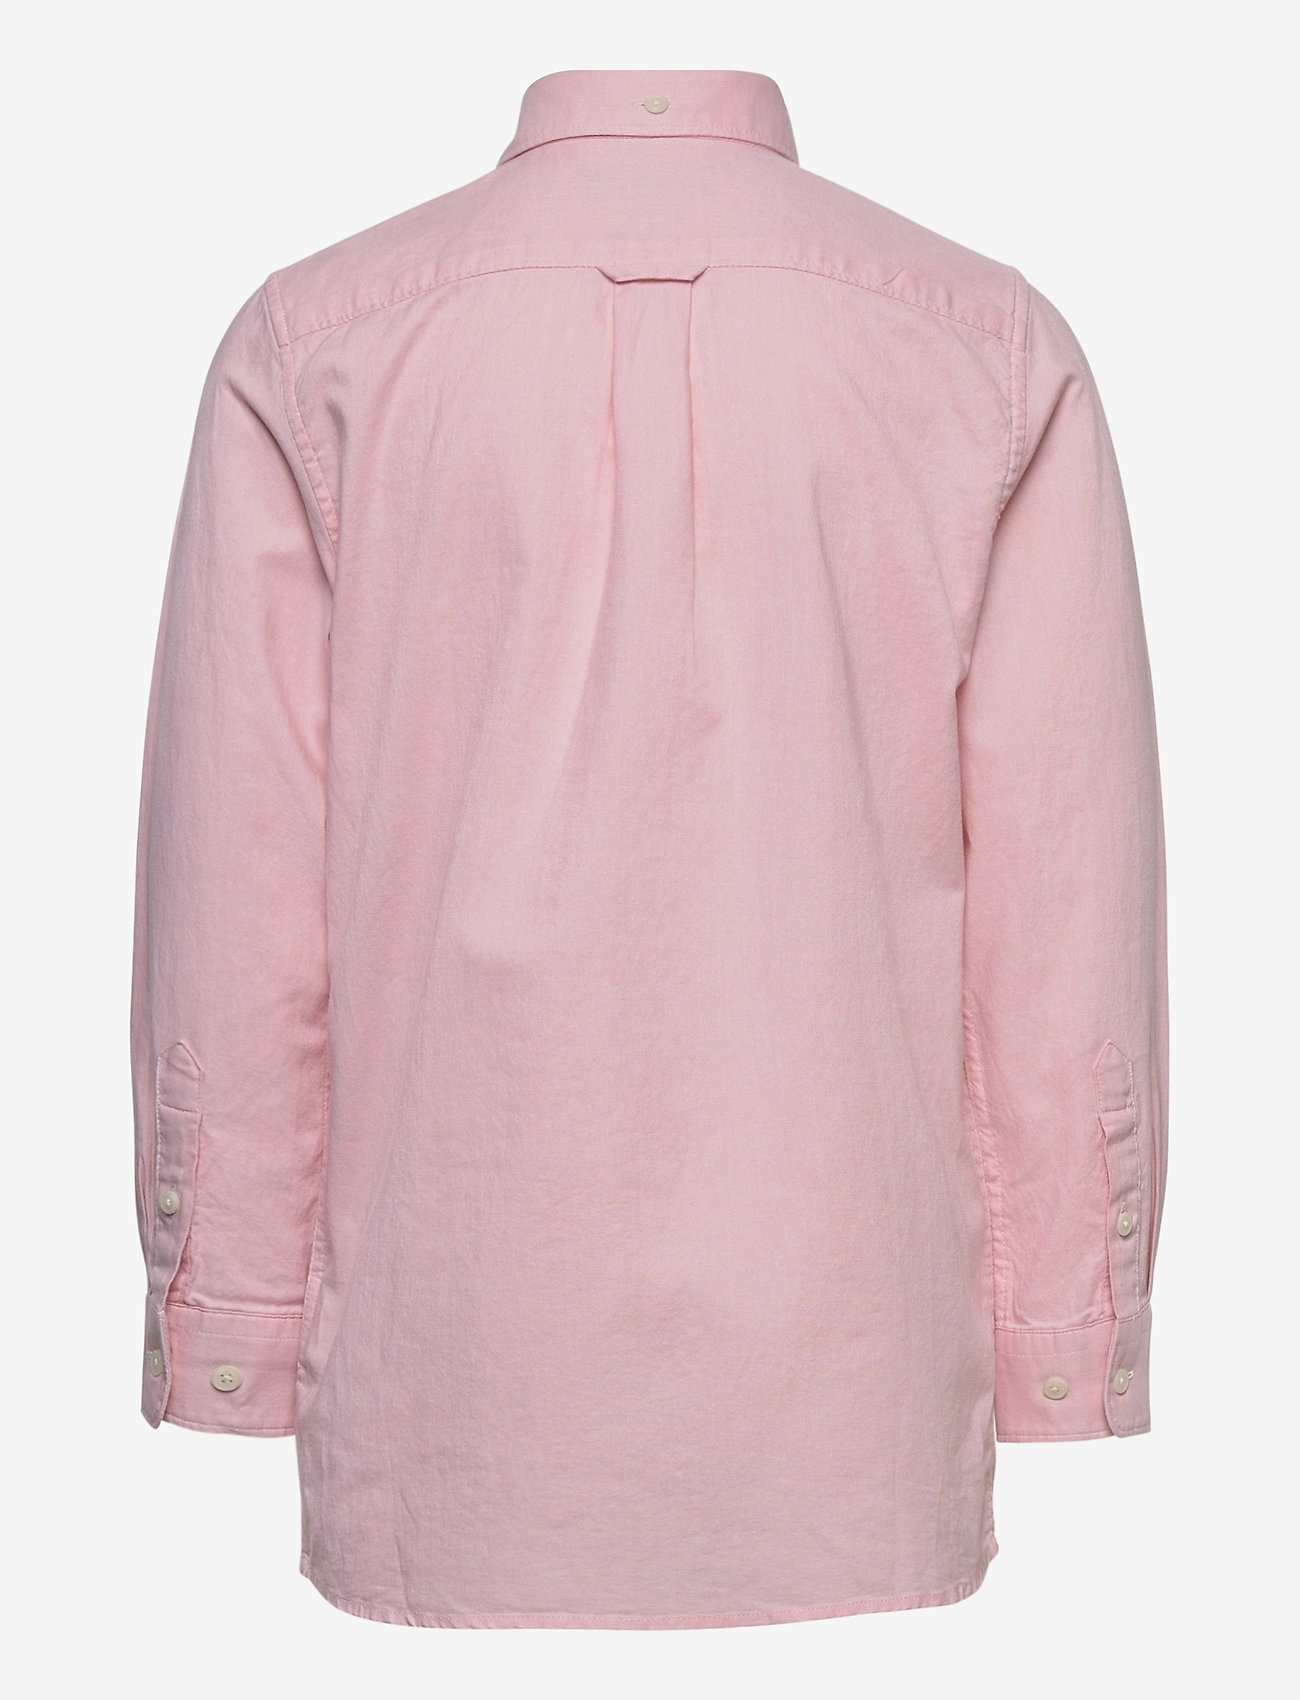 GANT - ARCHIVE OXFORD LS B.D SHIRT - chemises à manches longues - blushing pink - 1